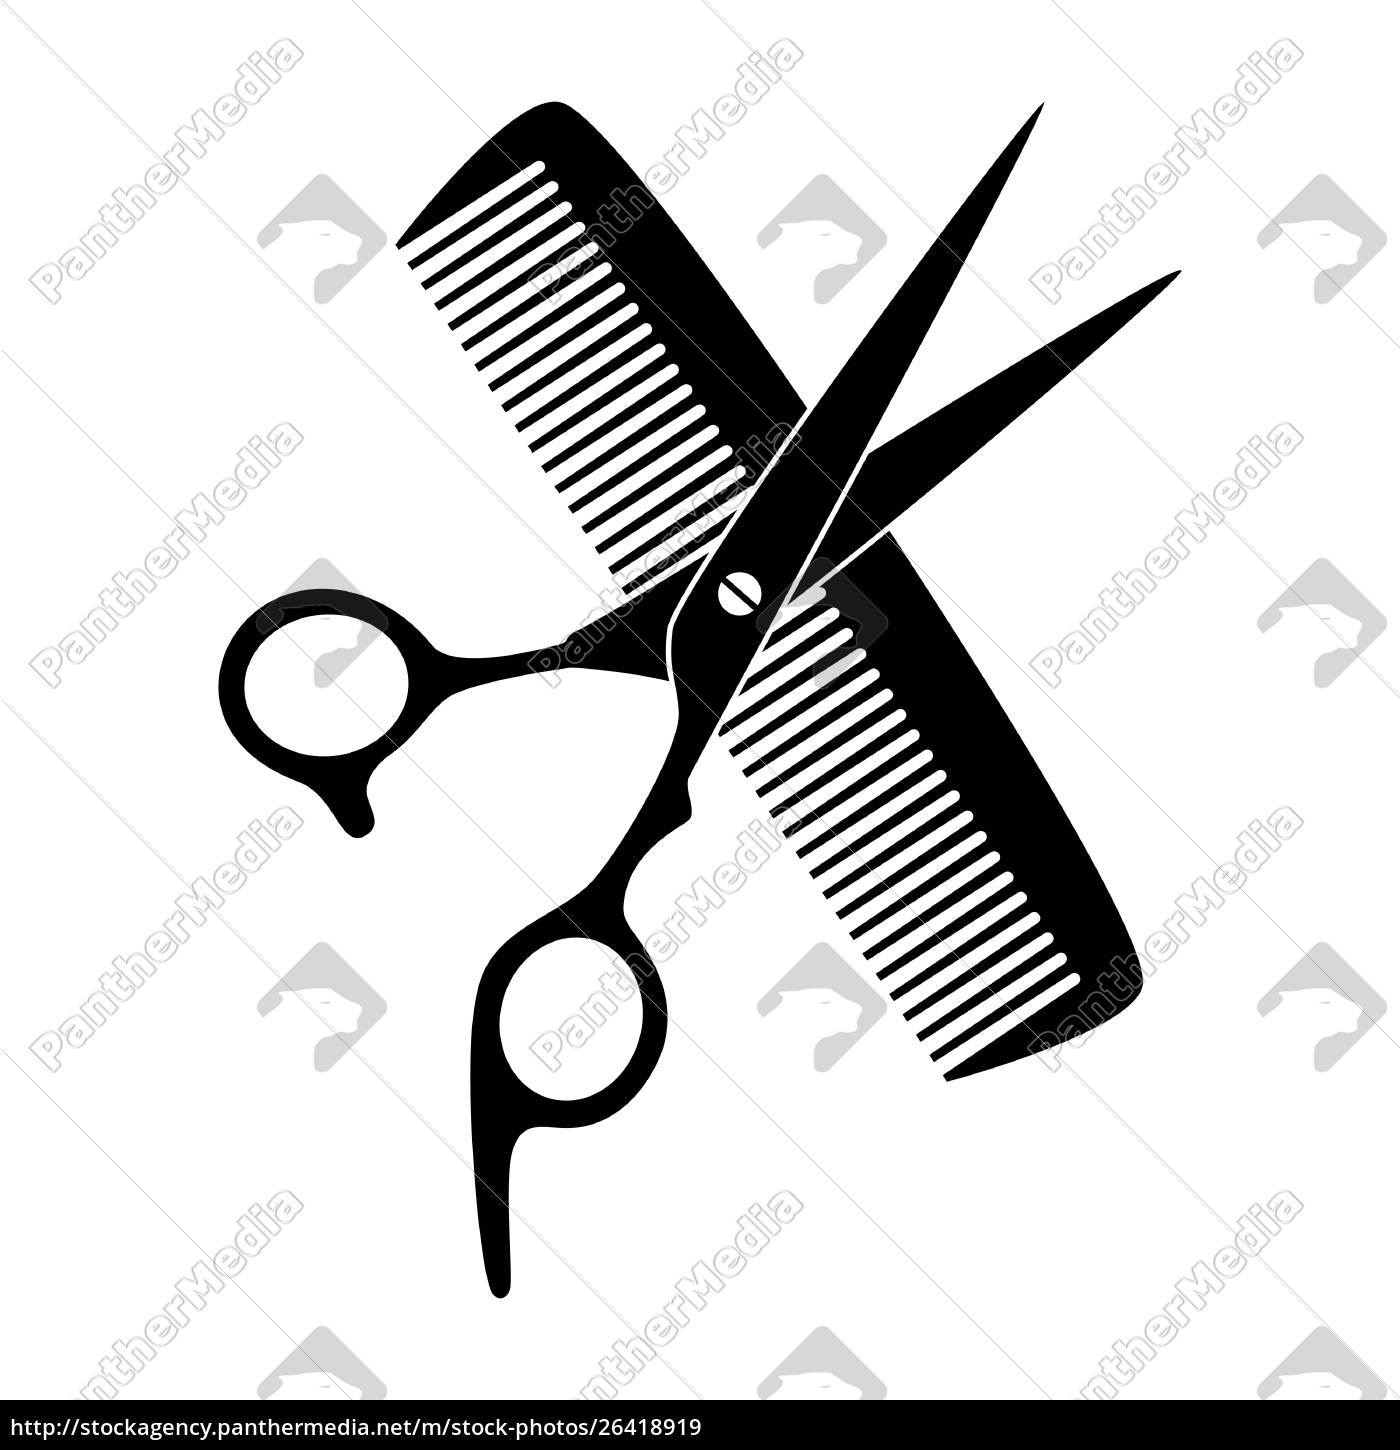 Scissors Logo - royalty free vector 26418919 - Scissors comb barber icon logo